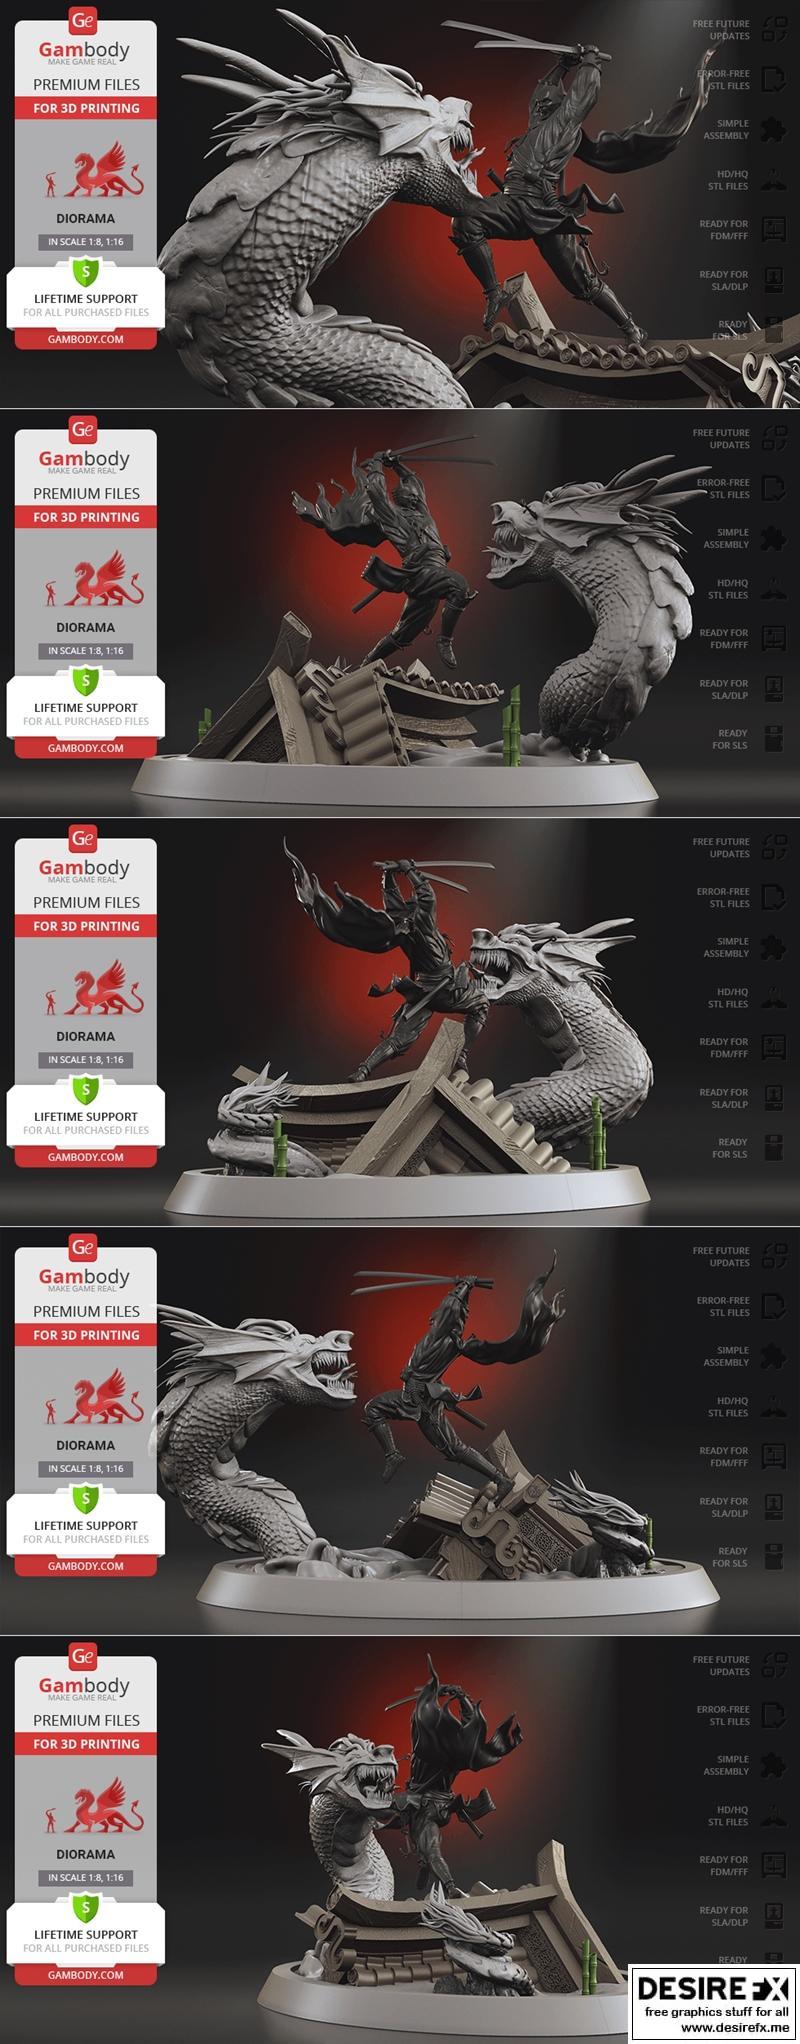 Batman Ninja vs Joker Dragon 3D Printing Figurines in Diorama | Assembly